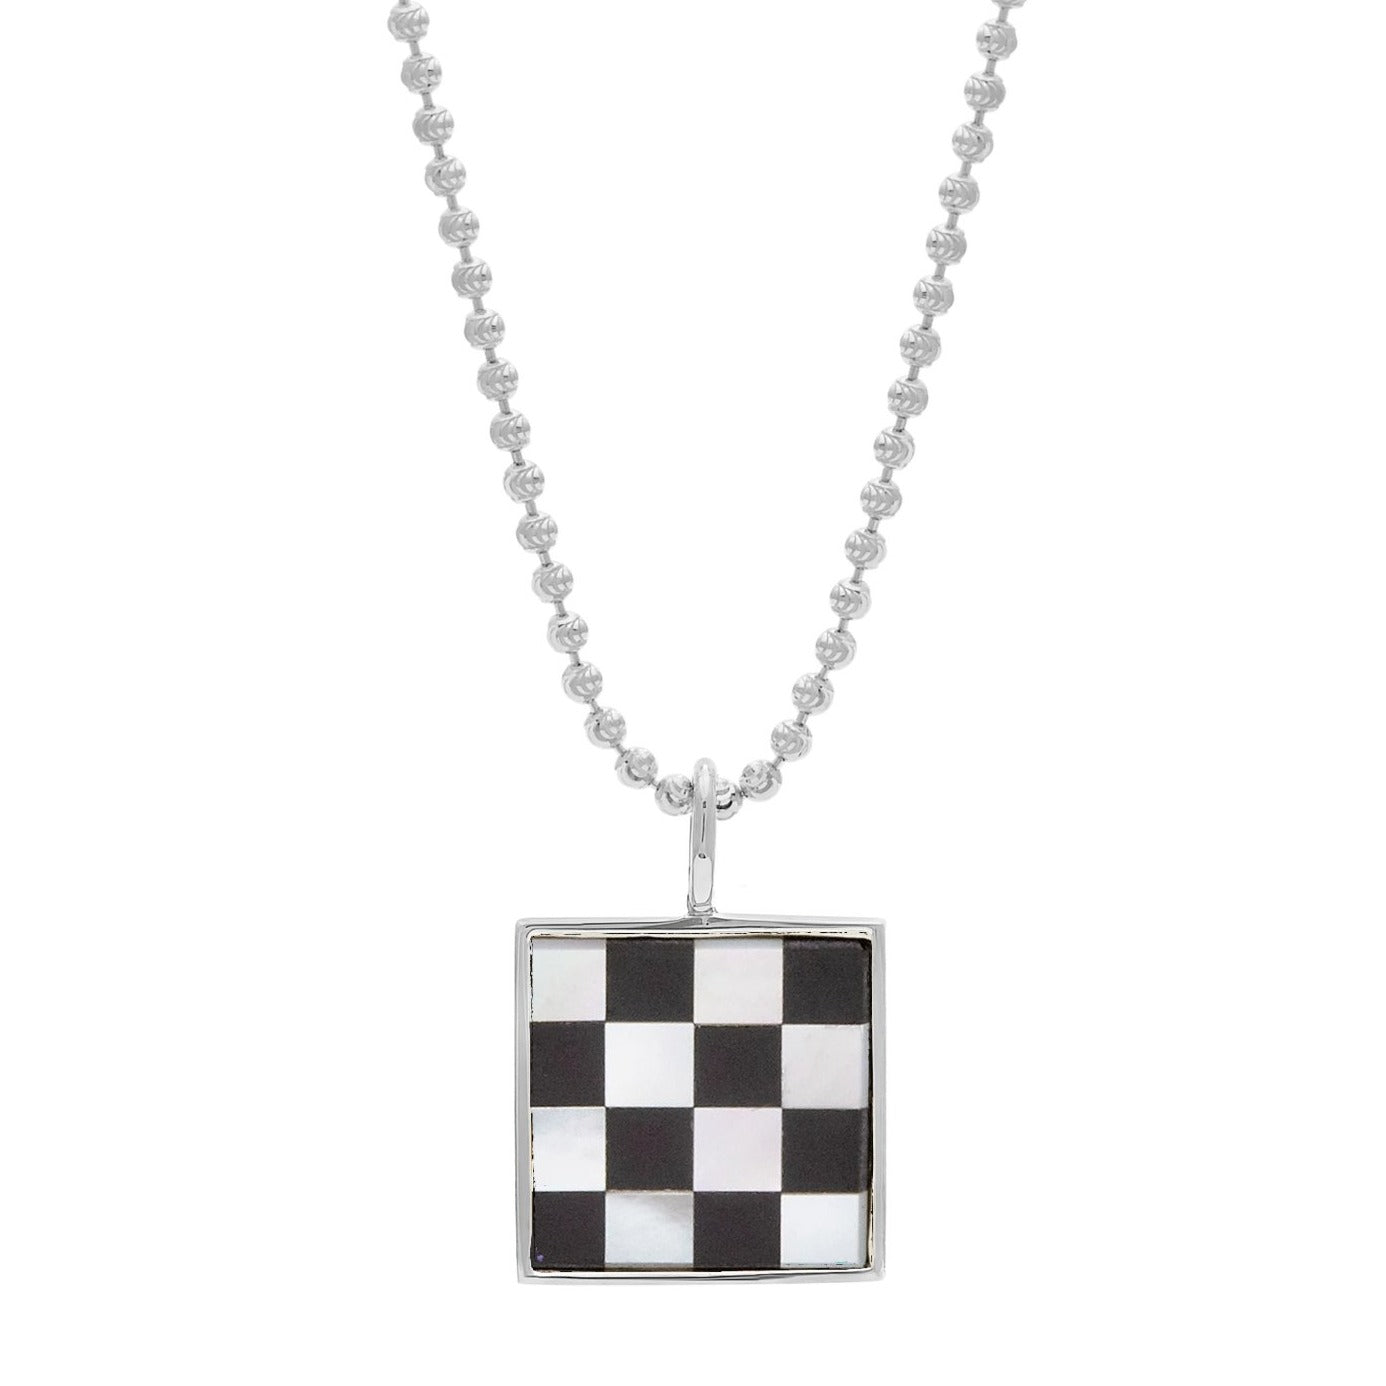 Samuel Necklace - Checkered